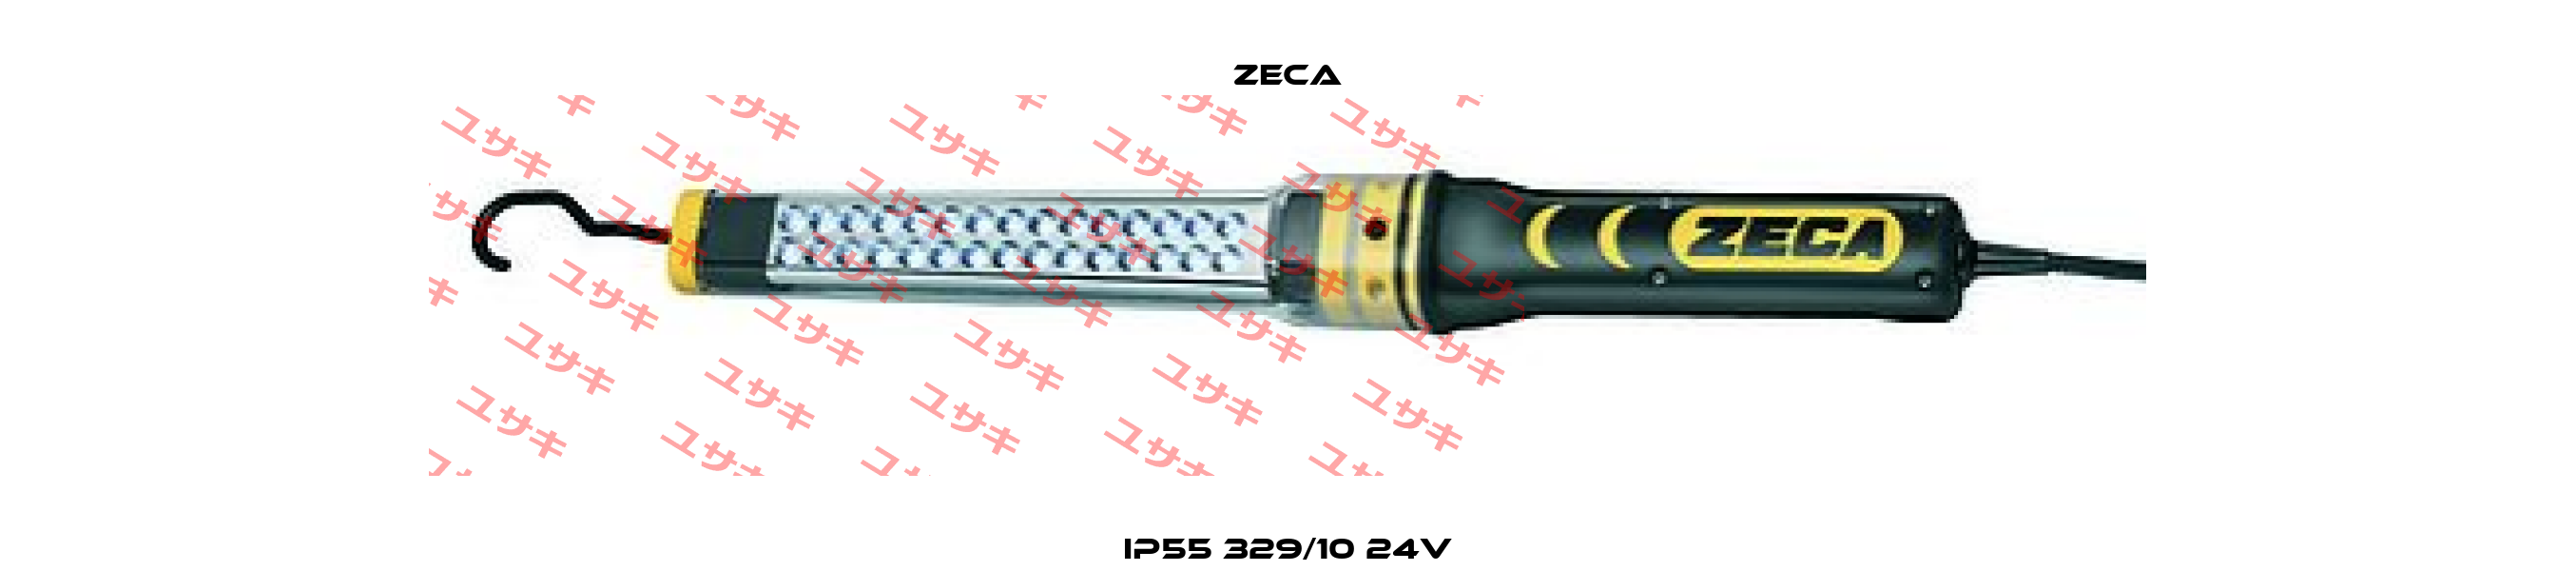 IP55 329/10 24V Zeca